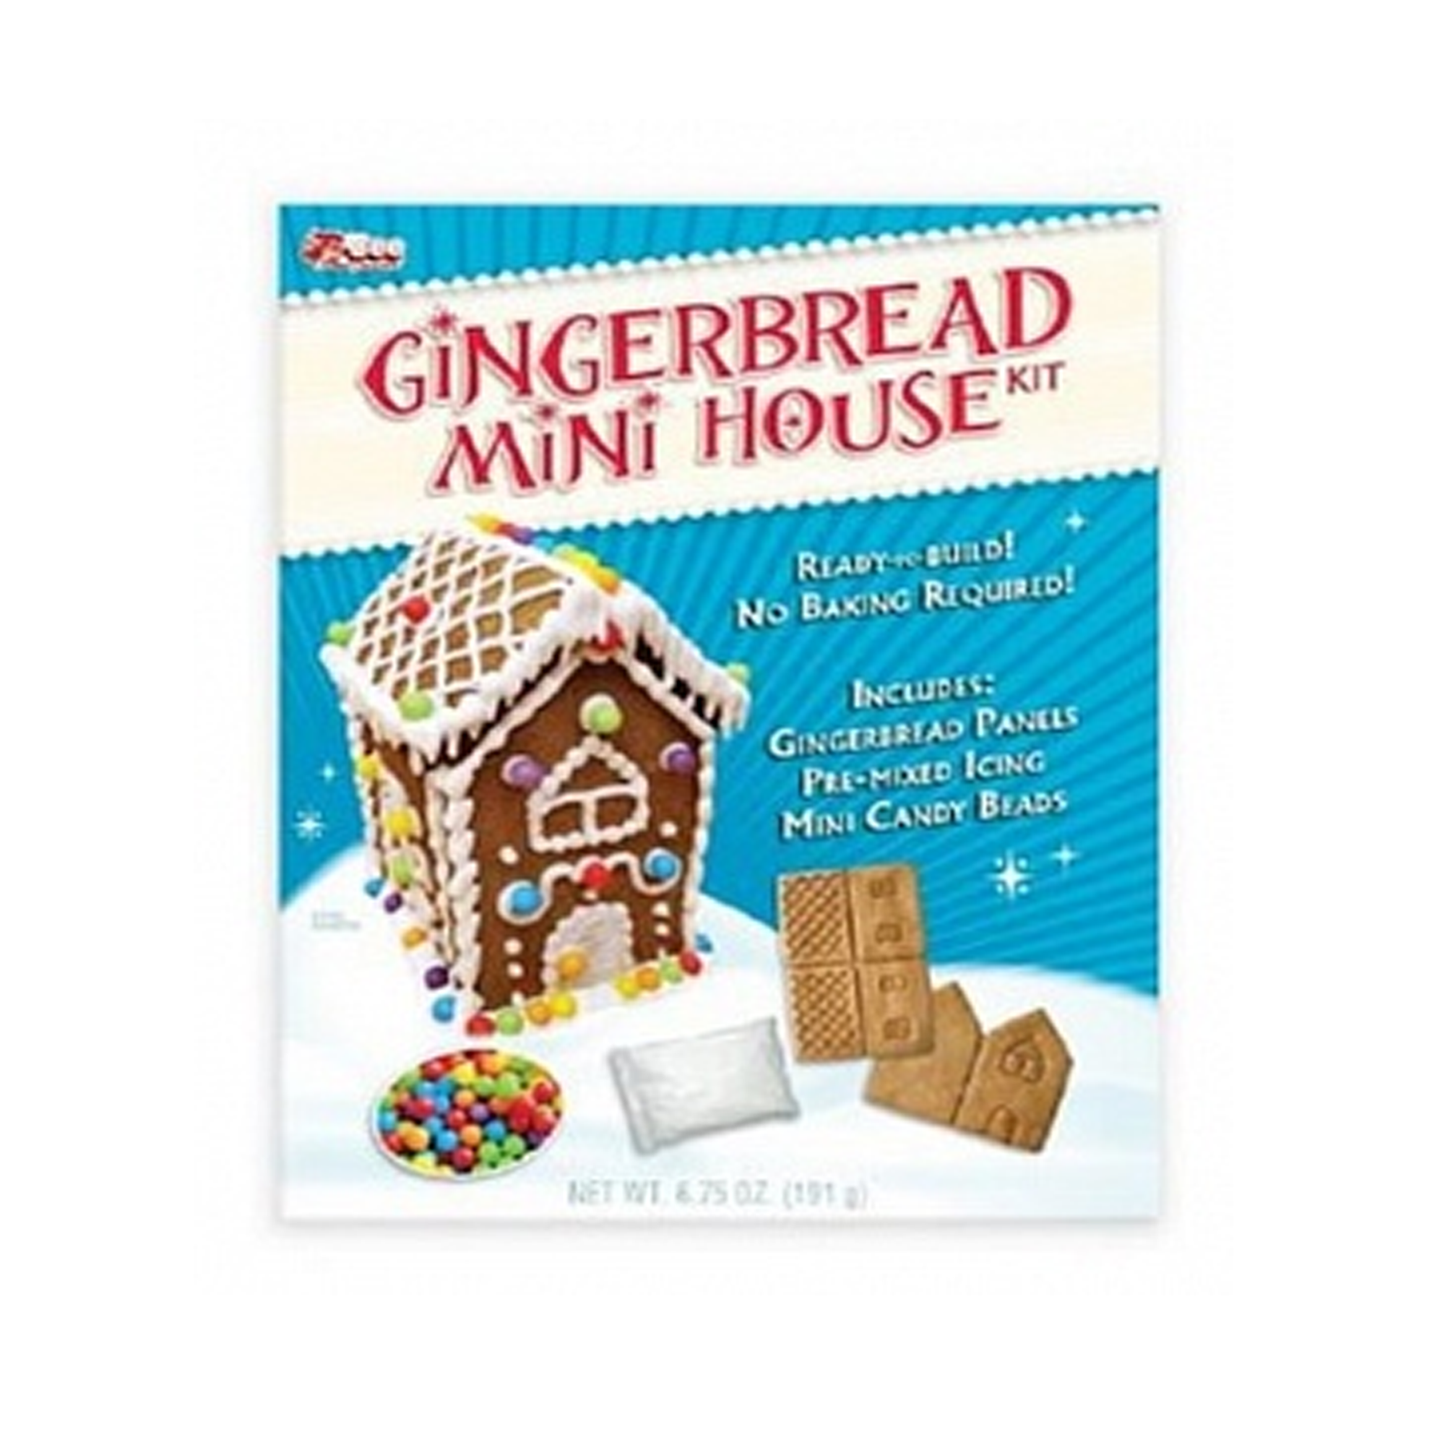 Gingerbread Mini House